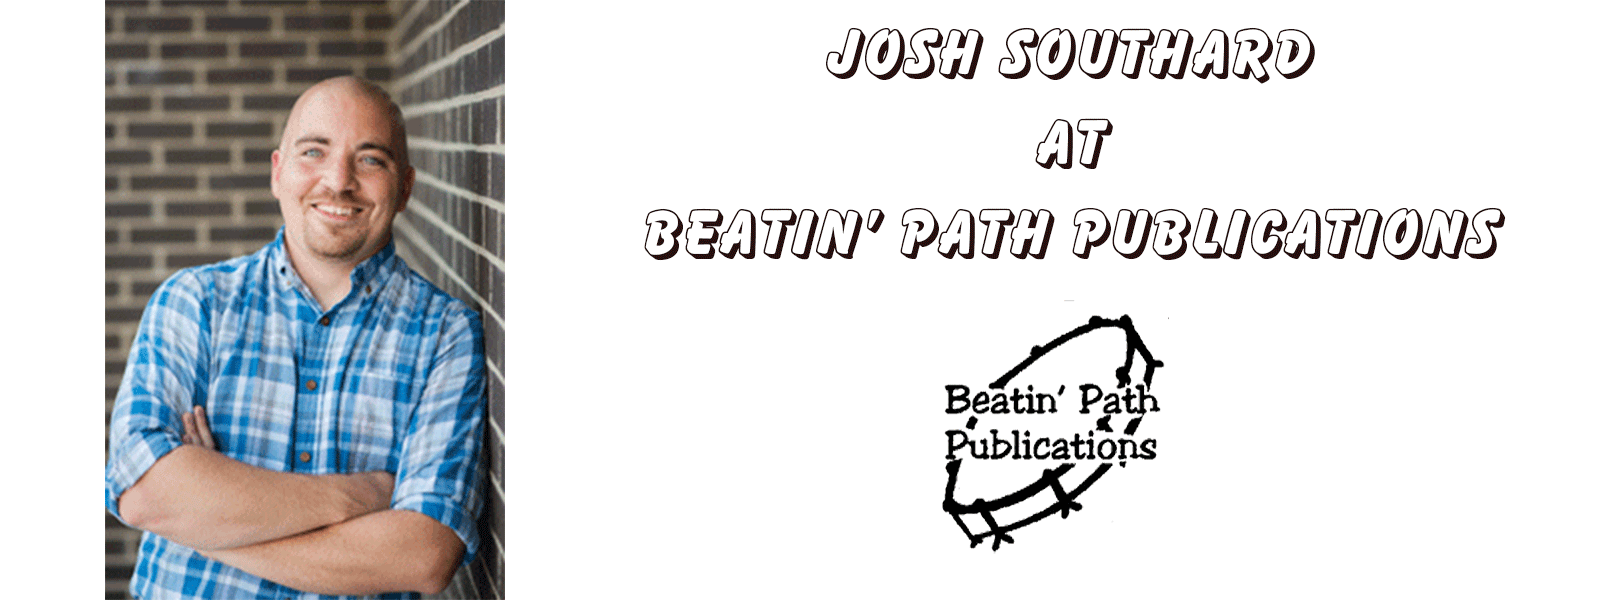 Josh Southard at Beatin' Path Publications